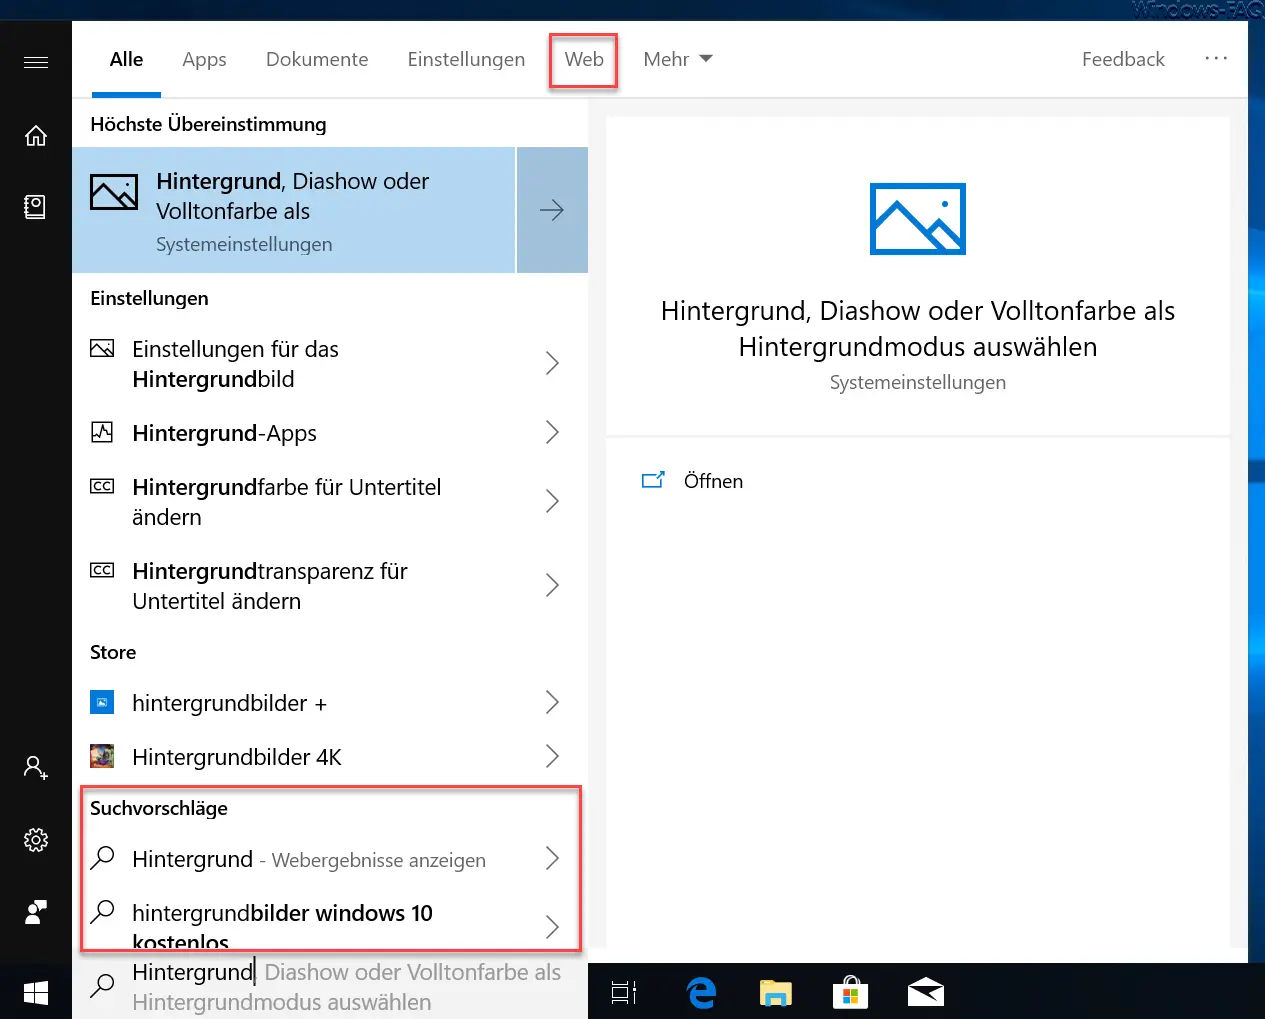 Windows 10 start menu Cortana with search suggestions